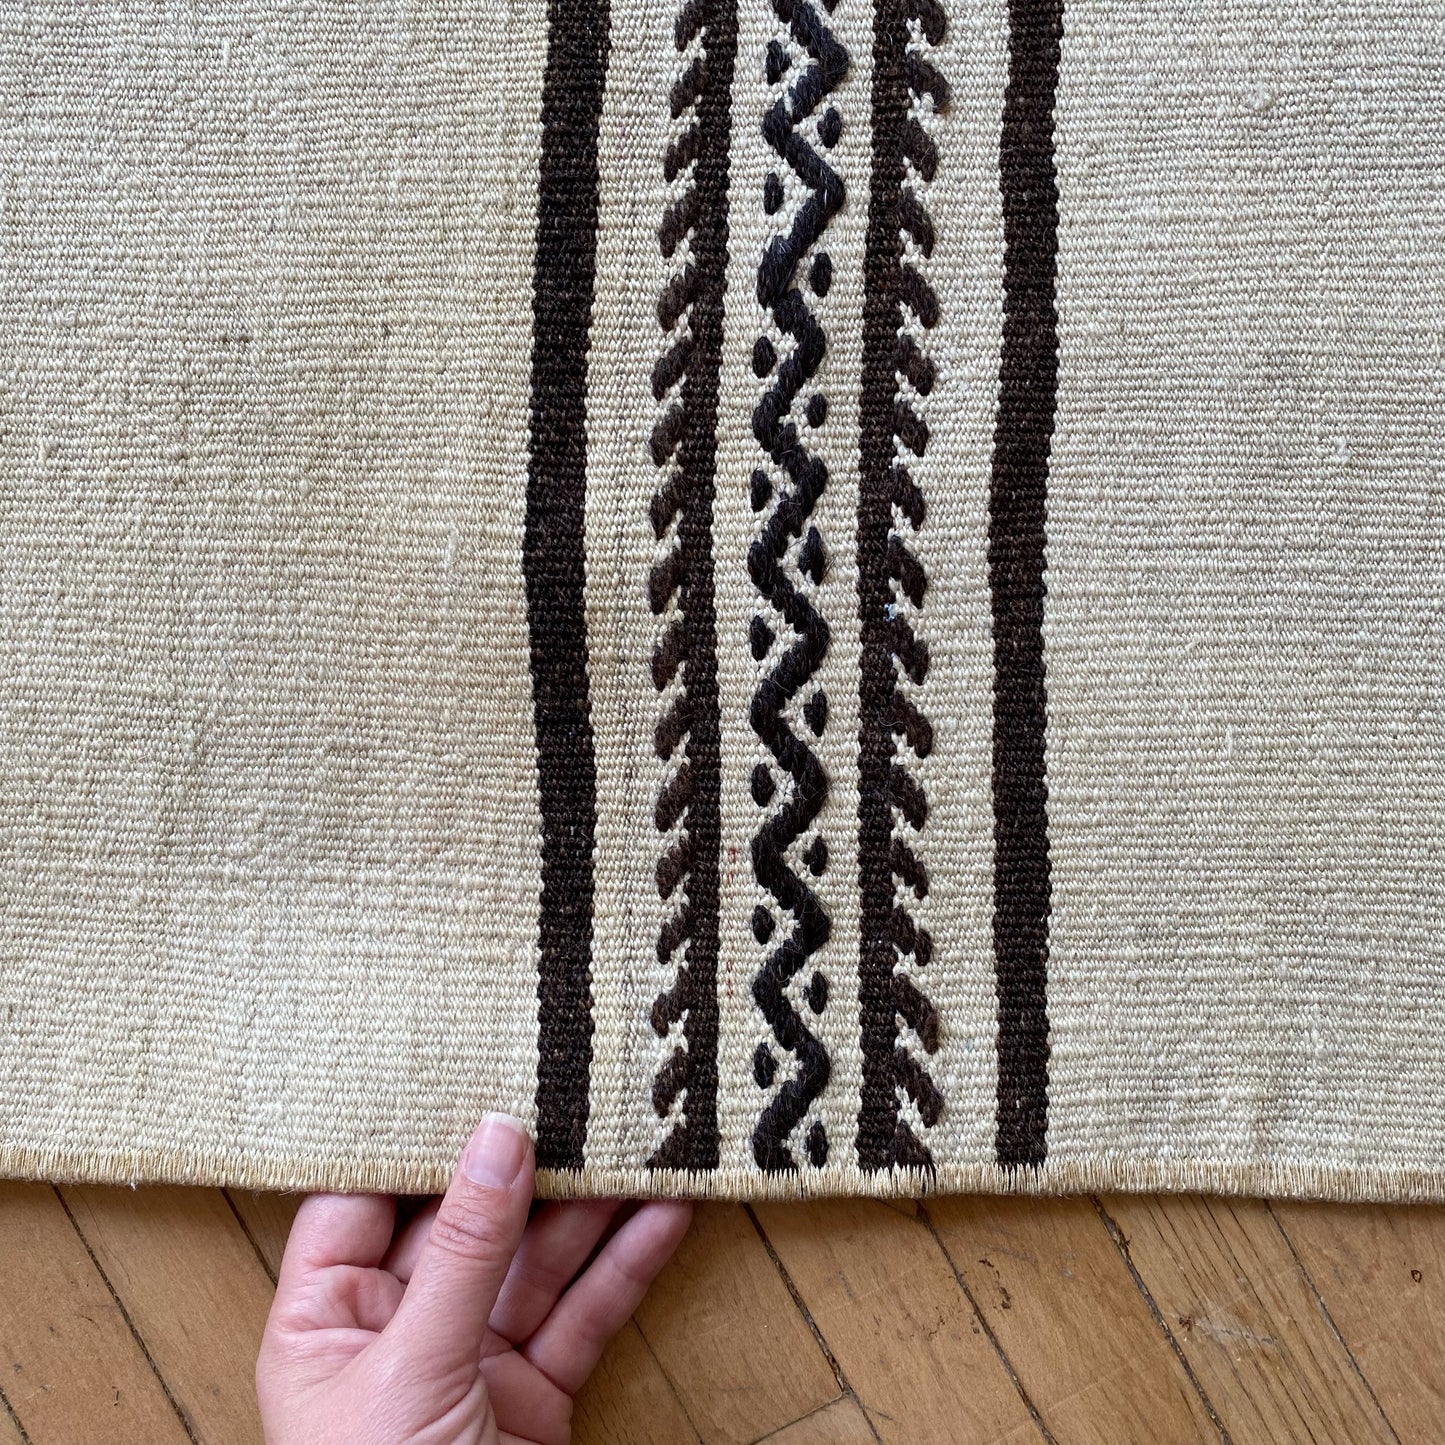 Vintage Hand-Woven Turkish Kilim Rug (1’ 10.5” x 3’11”)